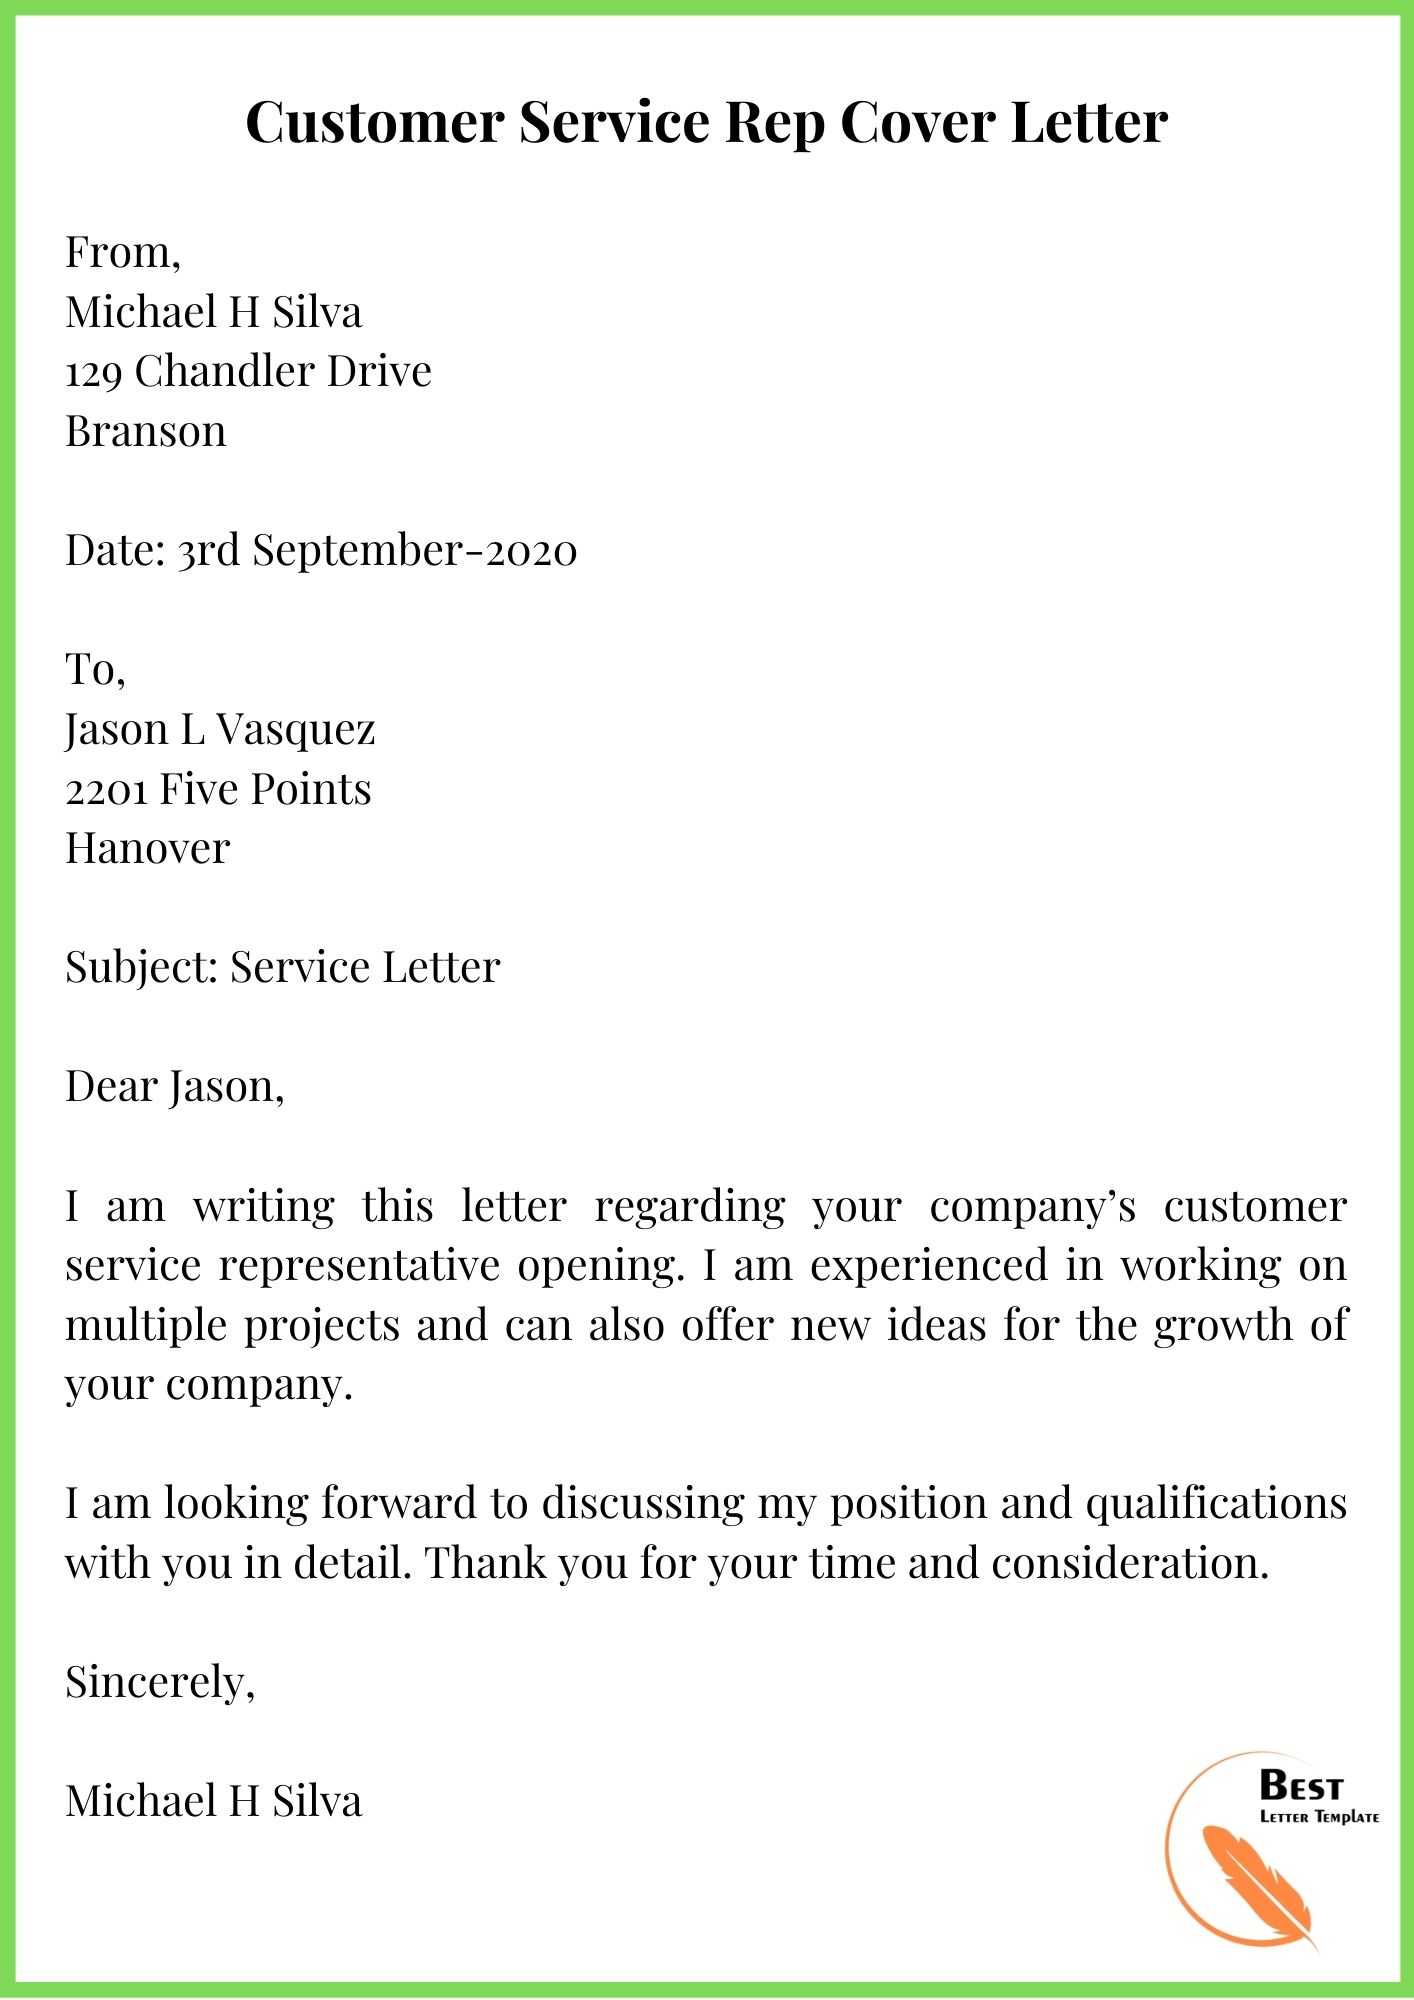 sample application letter for customer service representative